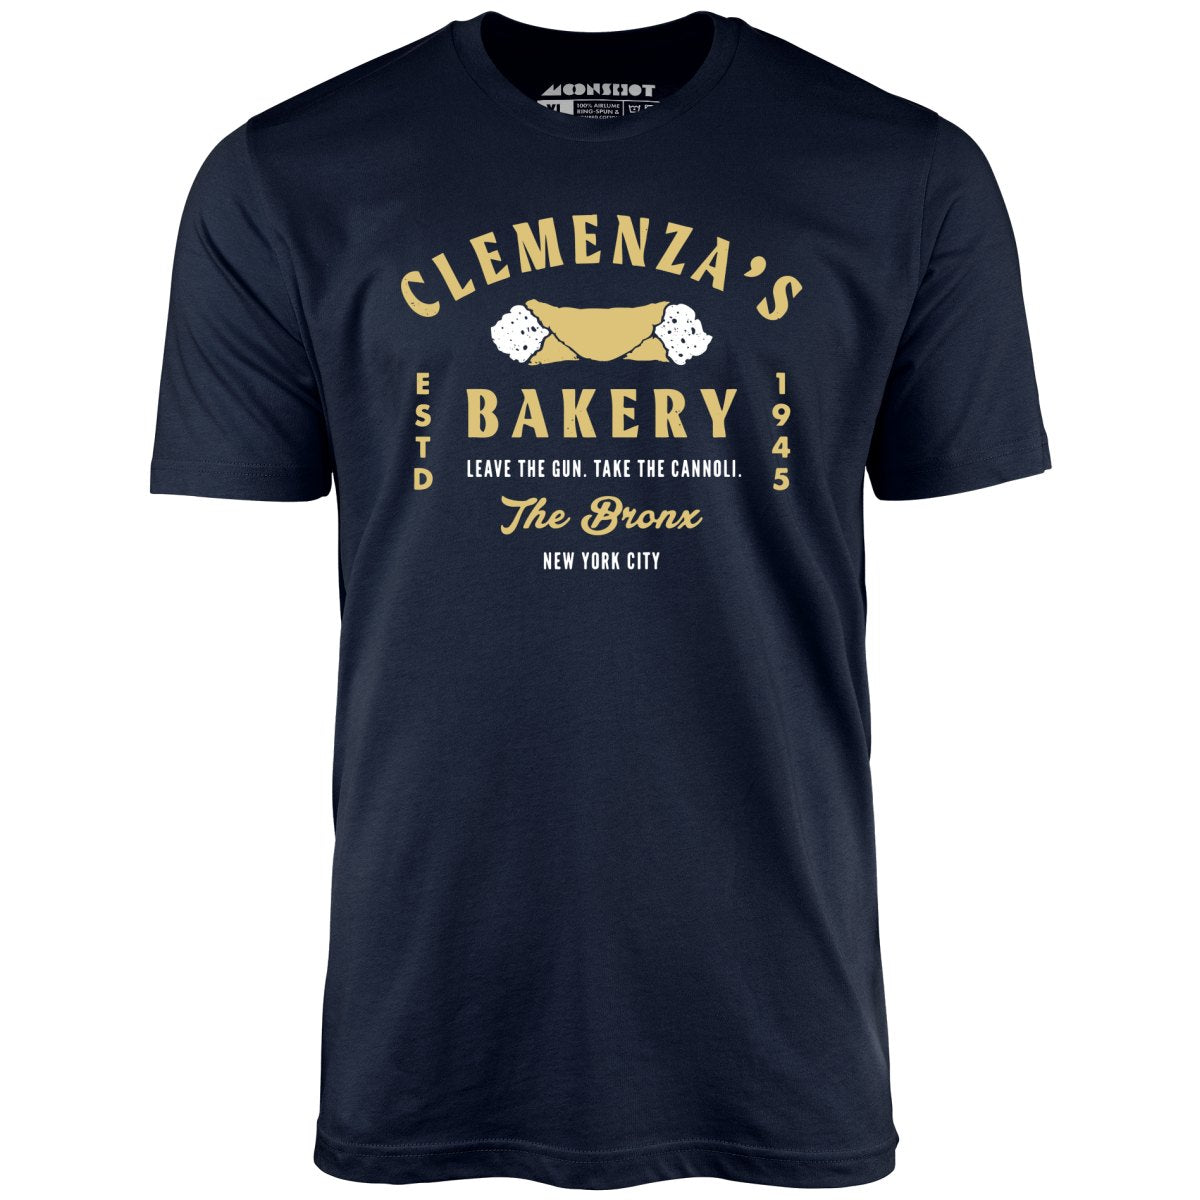 Clemenza's Bakery - Unisex T-Shirt